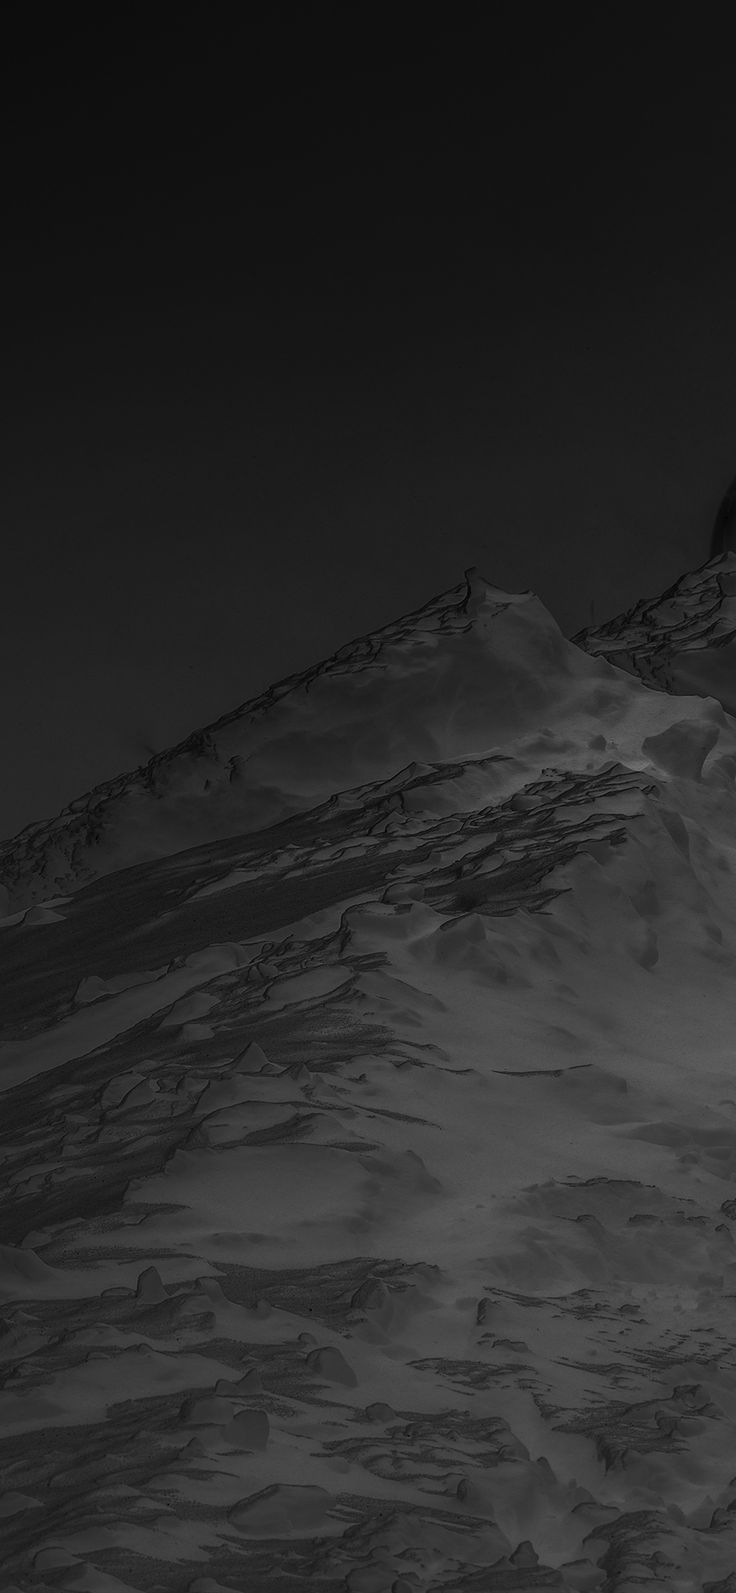 iPhone X wallpaper, dark mountain bubble minimal